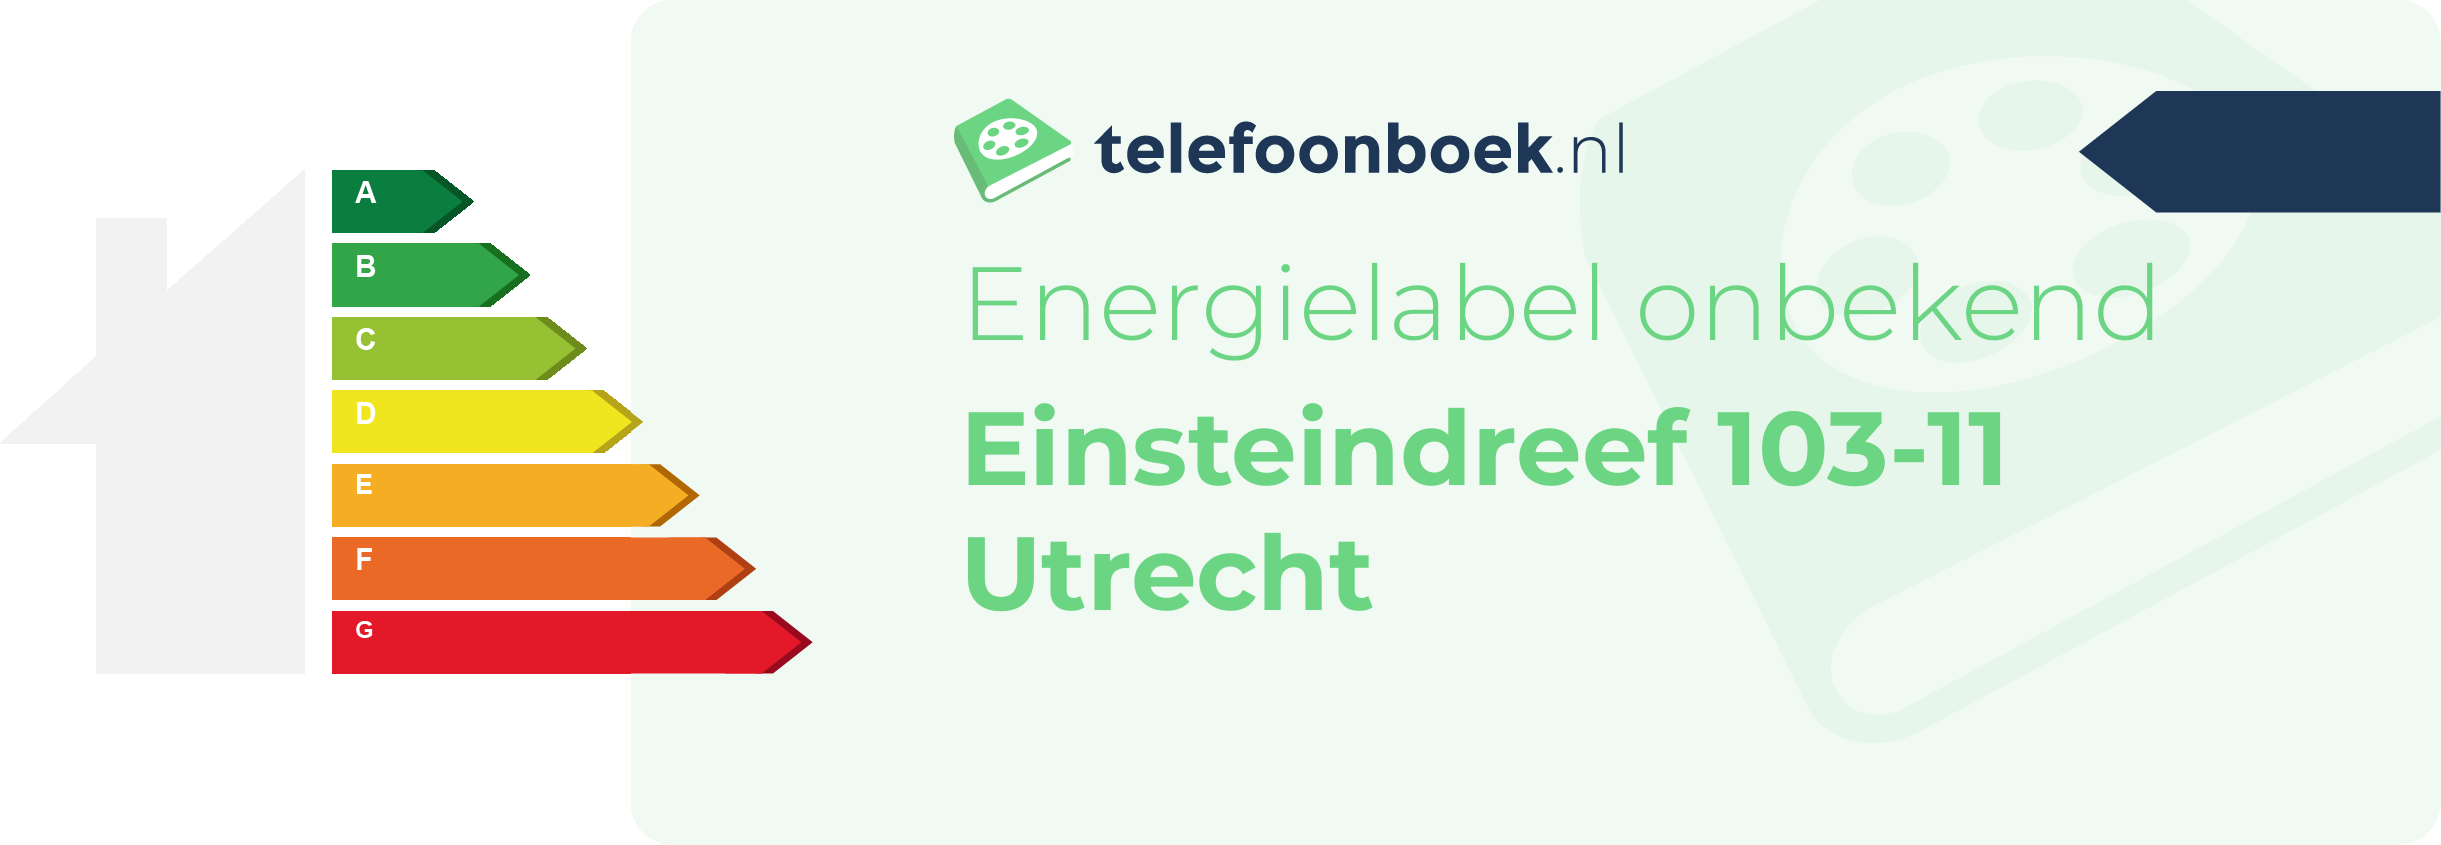 Energielabel Einsteindreef 103-11 Utrecht